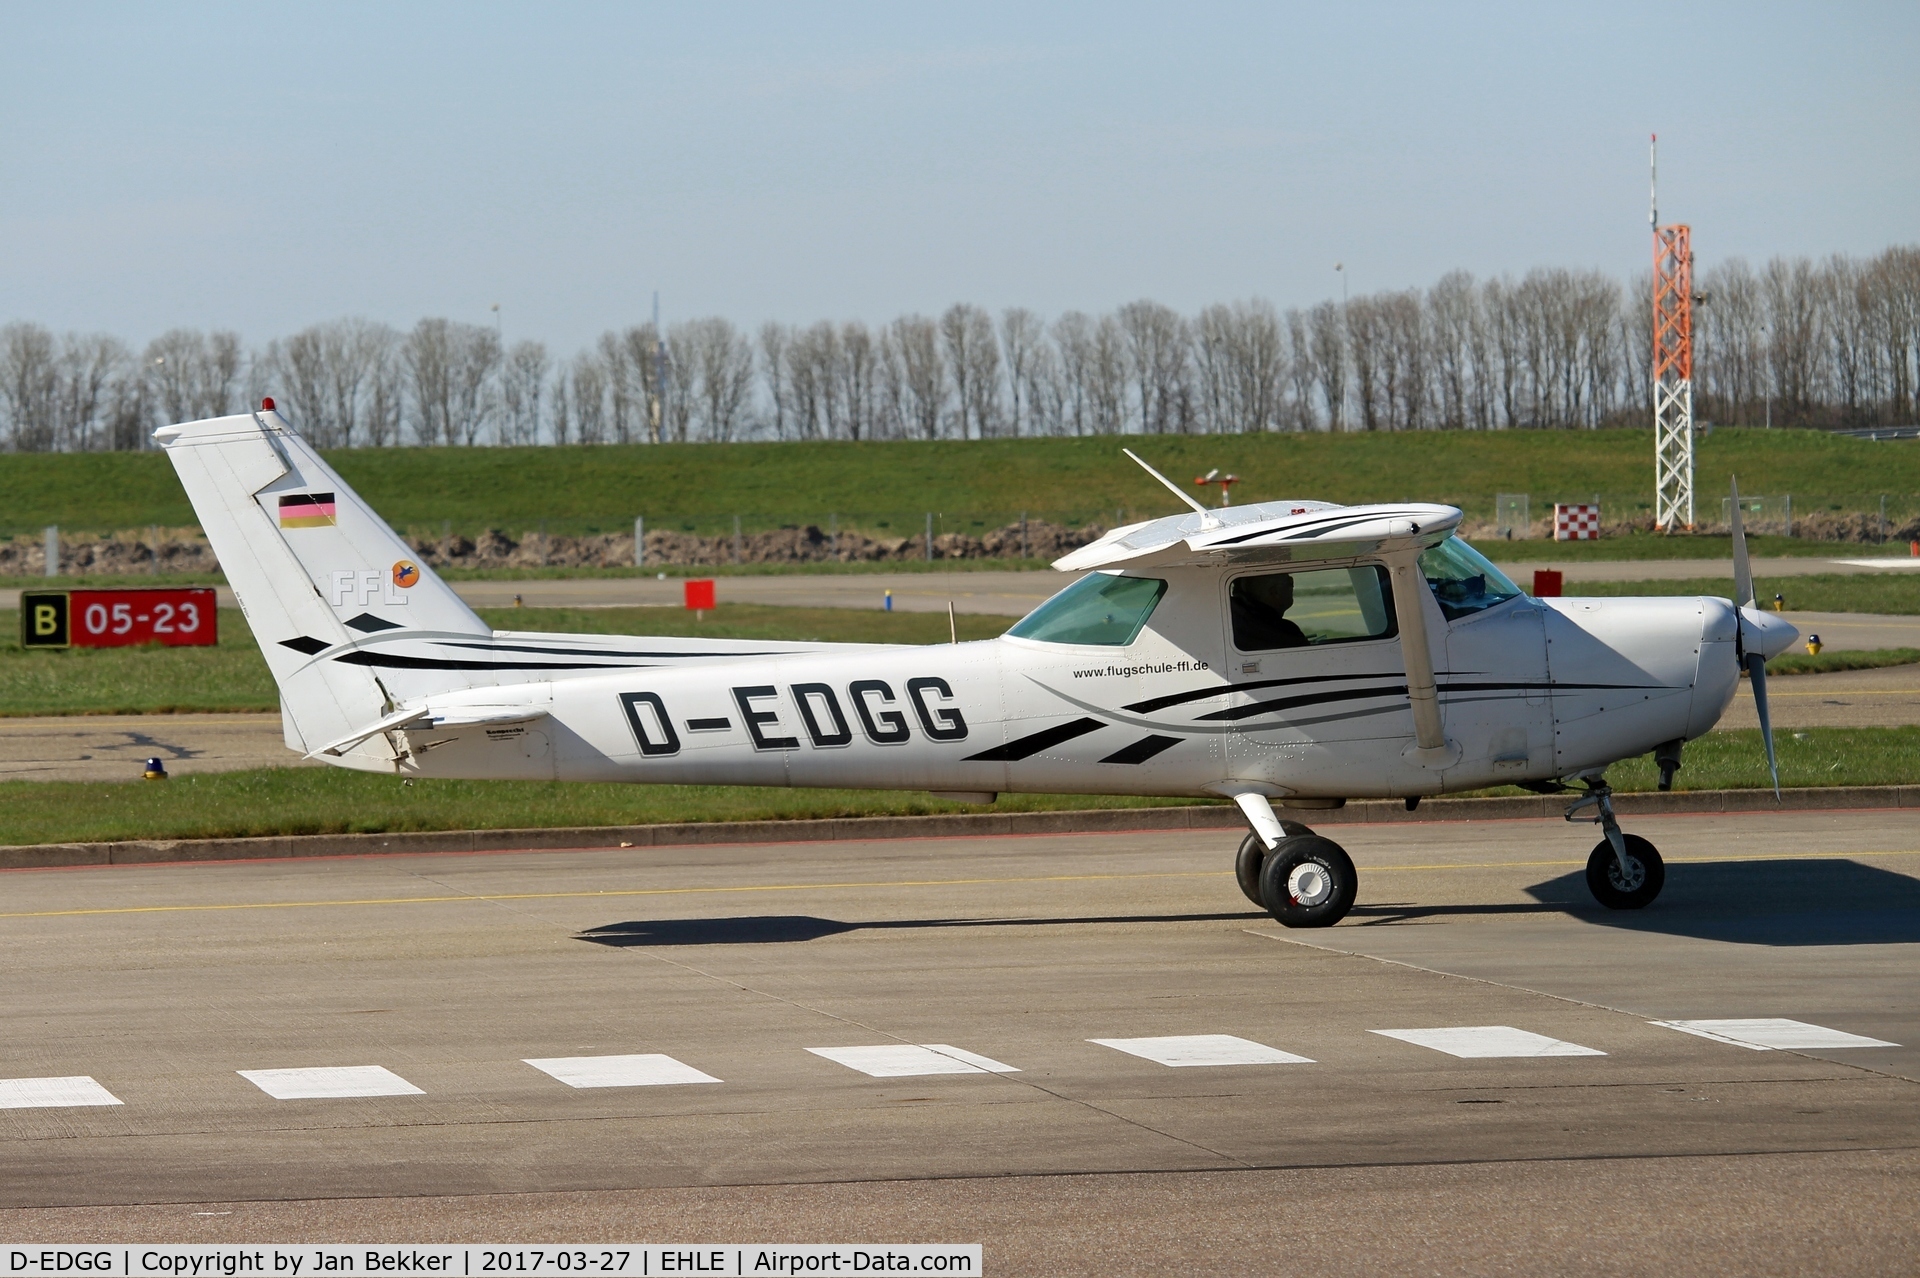 D-EDGG, 1984 Reims F152 C/N 1932, Lelystad Airport